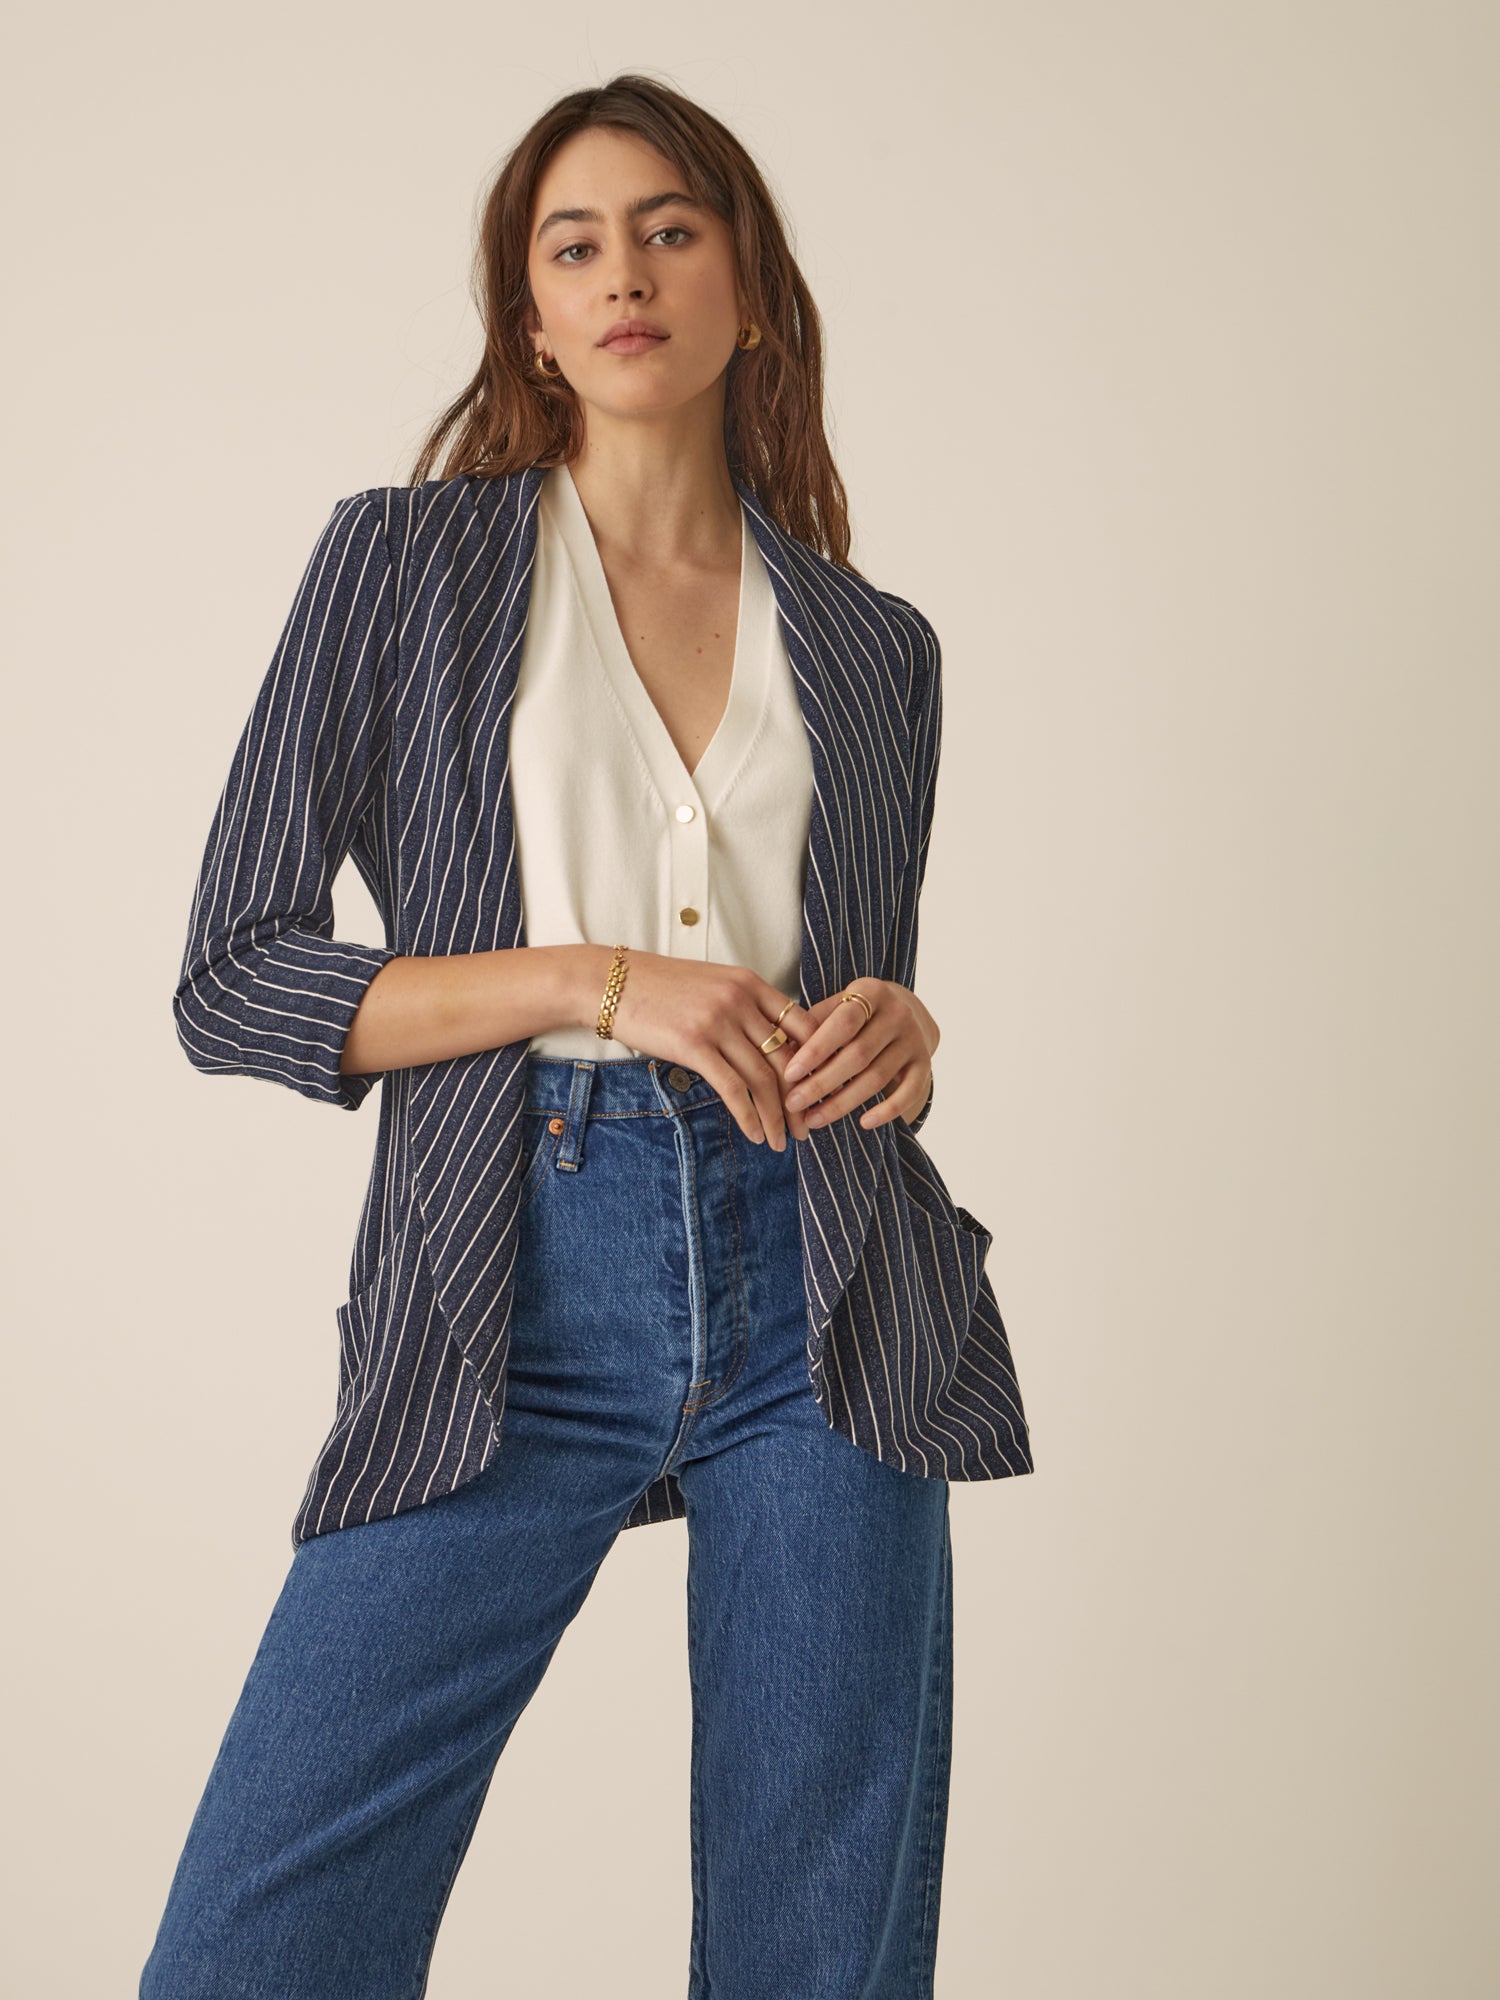 Classic Melanie Shawl Simple Staple Navy Striped Workwear Blazer Jacket Stripes Everyday Shawl Front Pockets Best Seller Customer Favorite